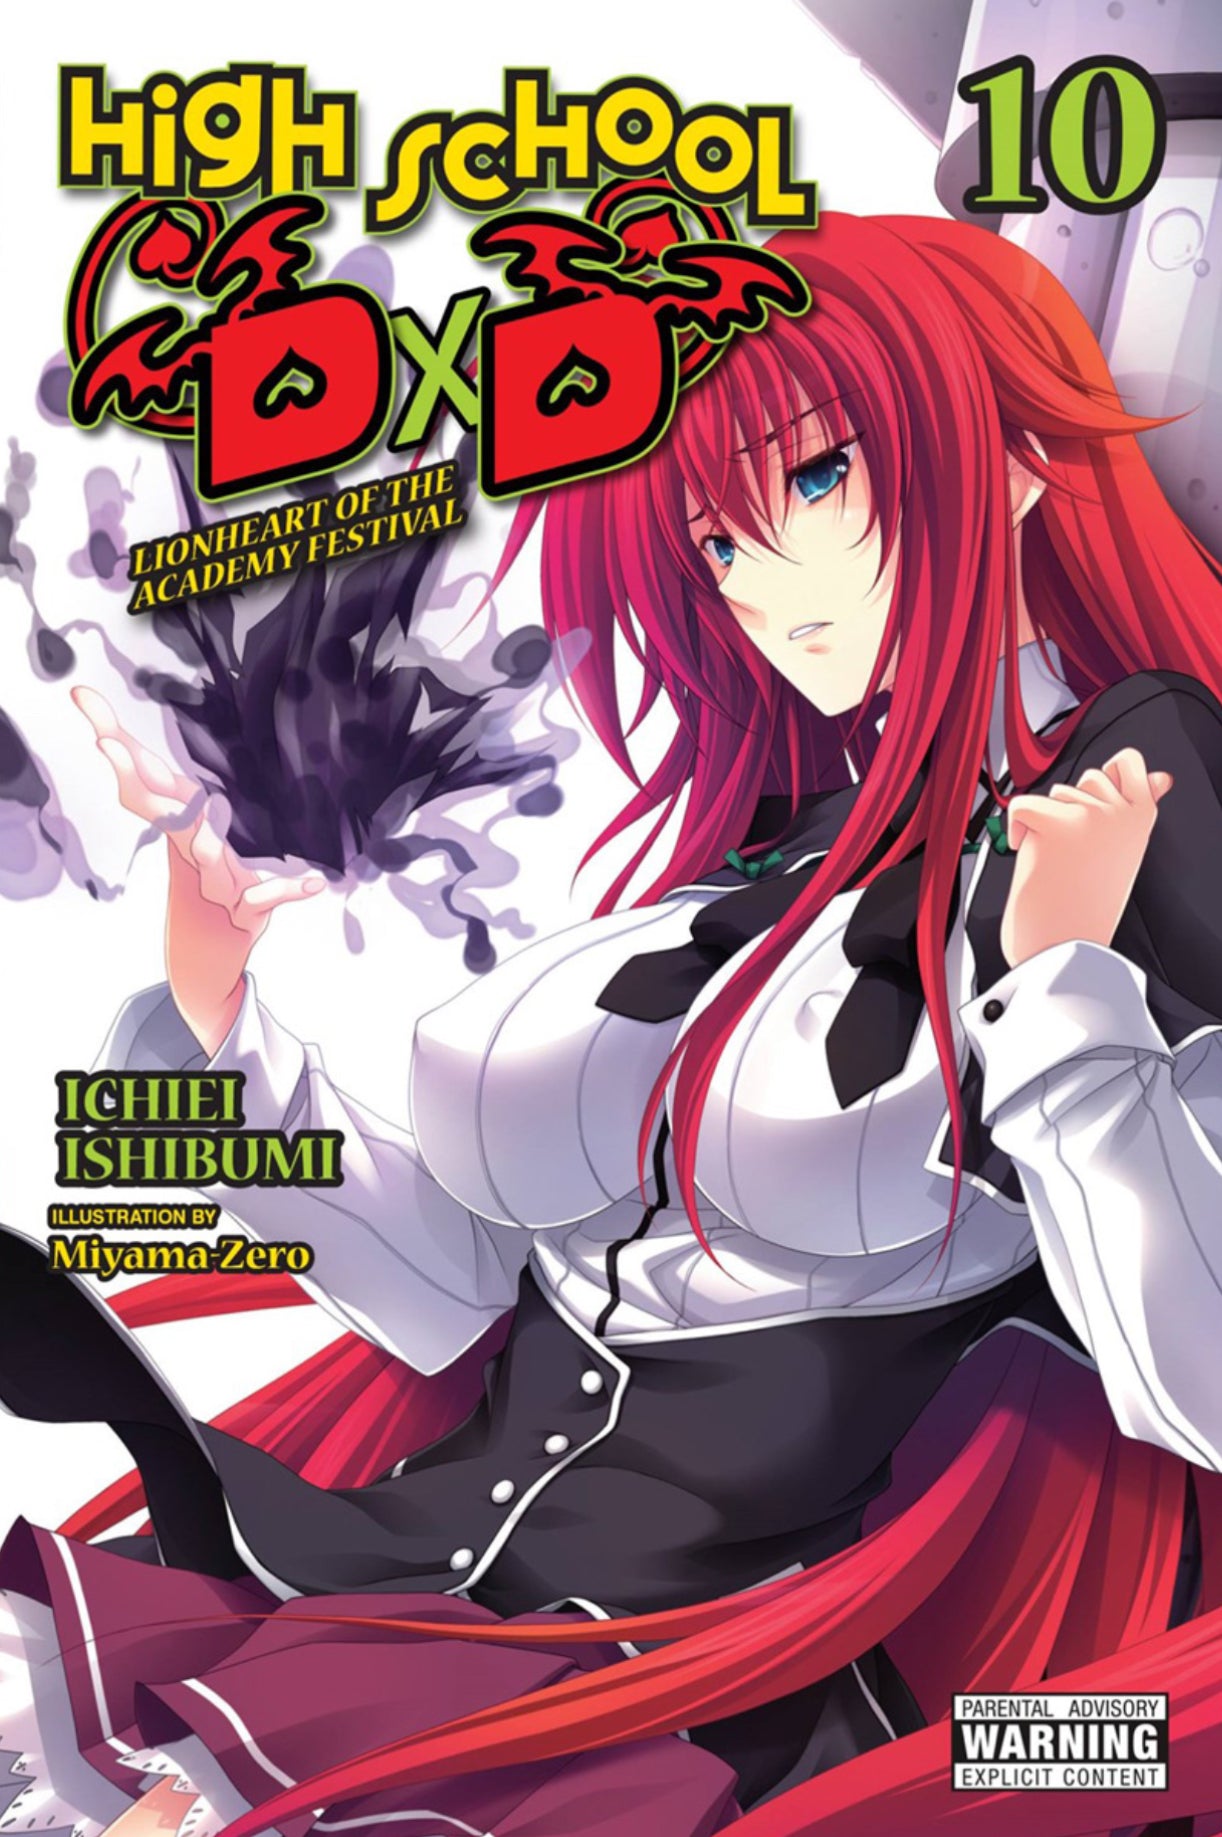 High School DxD Novel Volume 10 Lionheart of the Academy Festival Manga